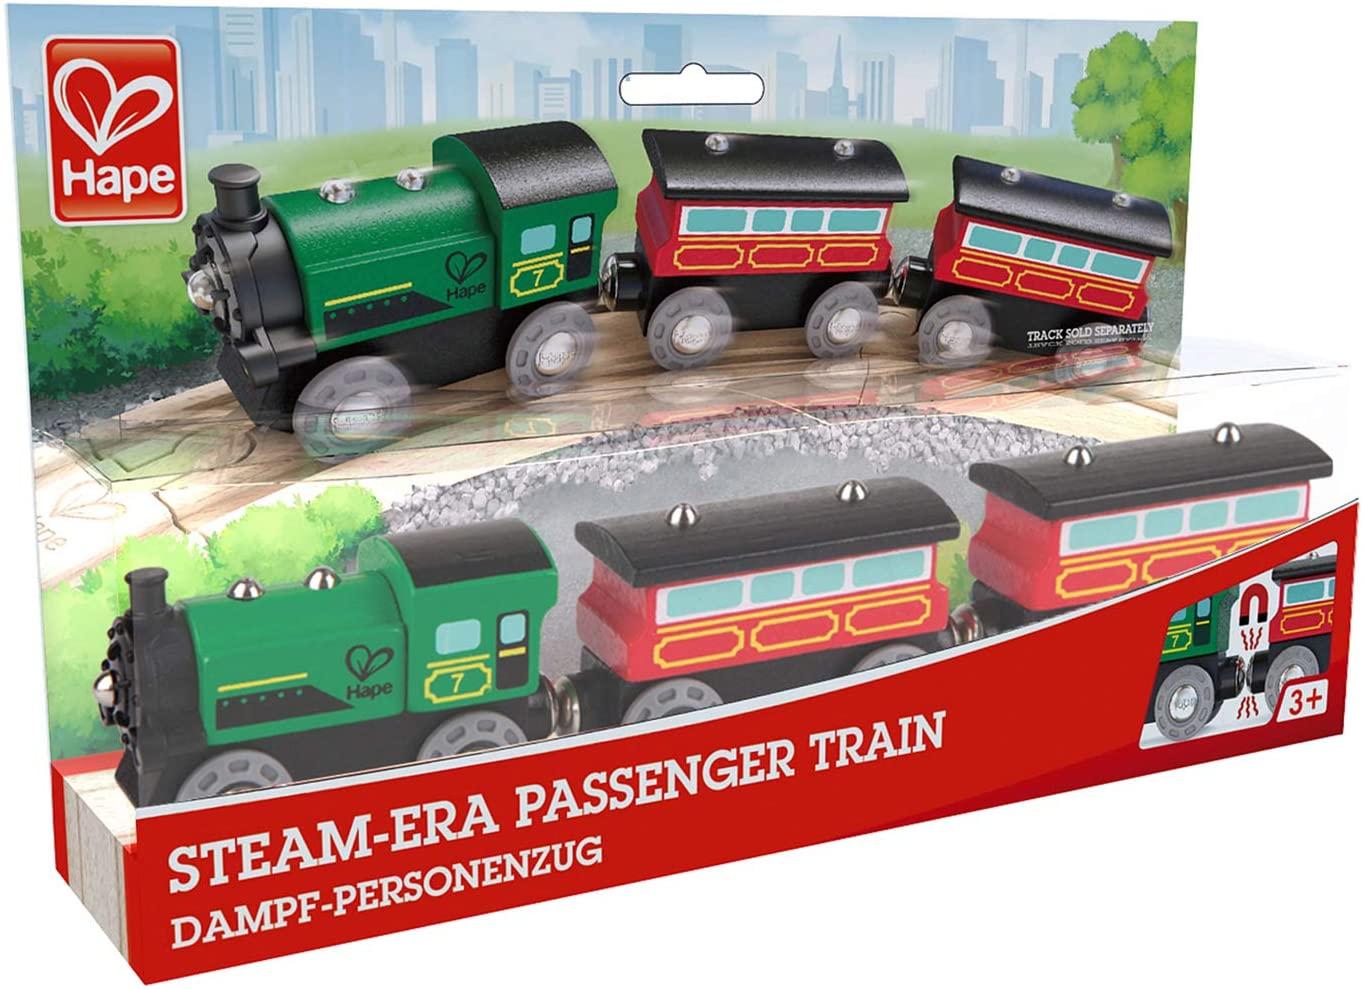 Hape Steam era passenger train in manufacturer's packaging